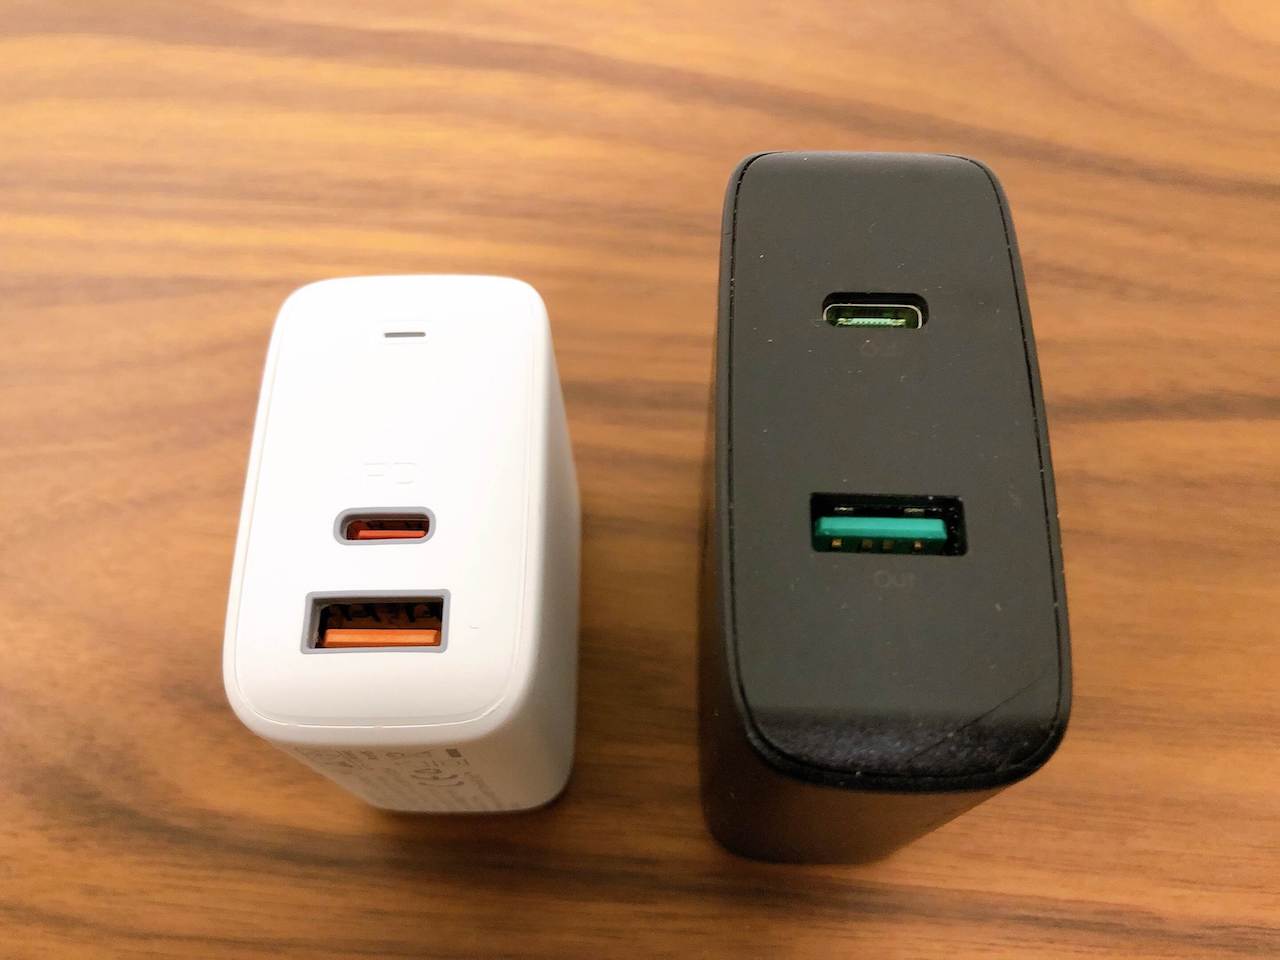 AukeyのUSB充電器「65W PA-B3」（白色）と「45W PA-Y10」（黒色）のUSBポート側を比較した写真です。